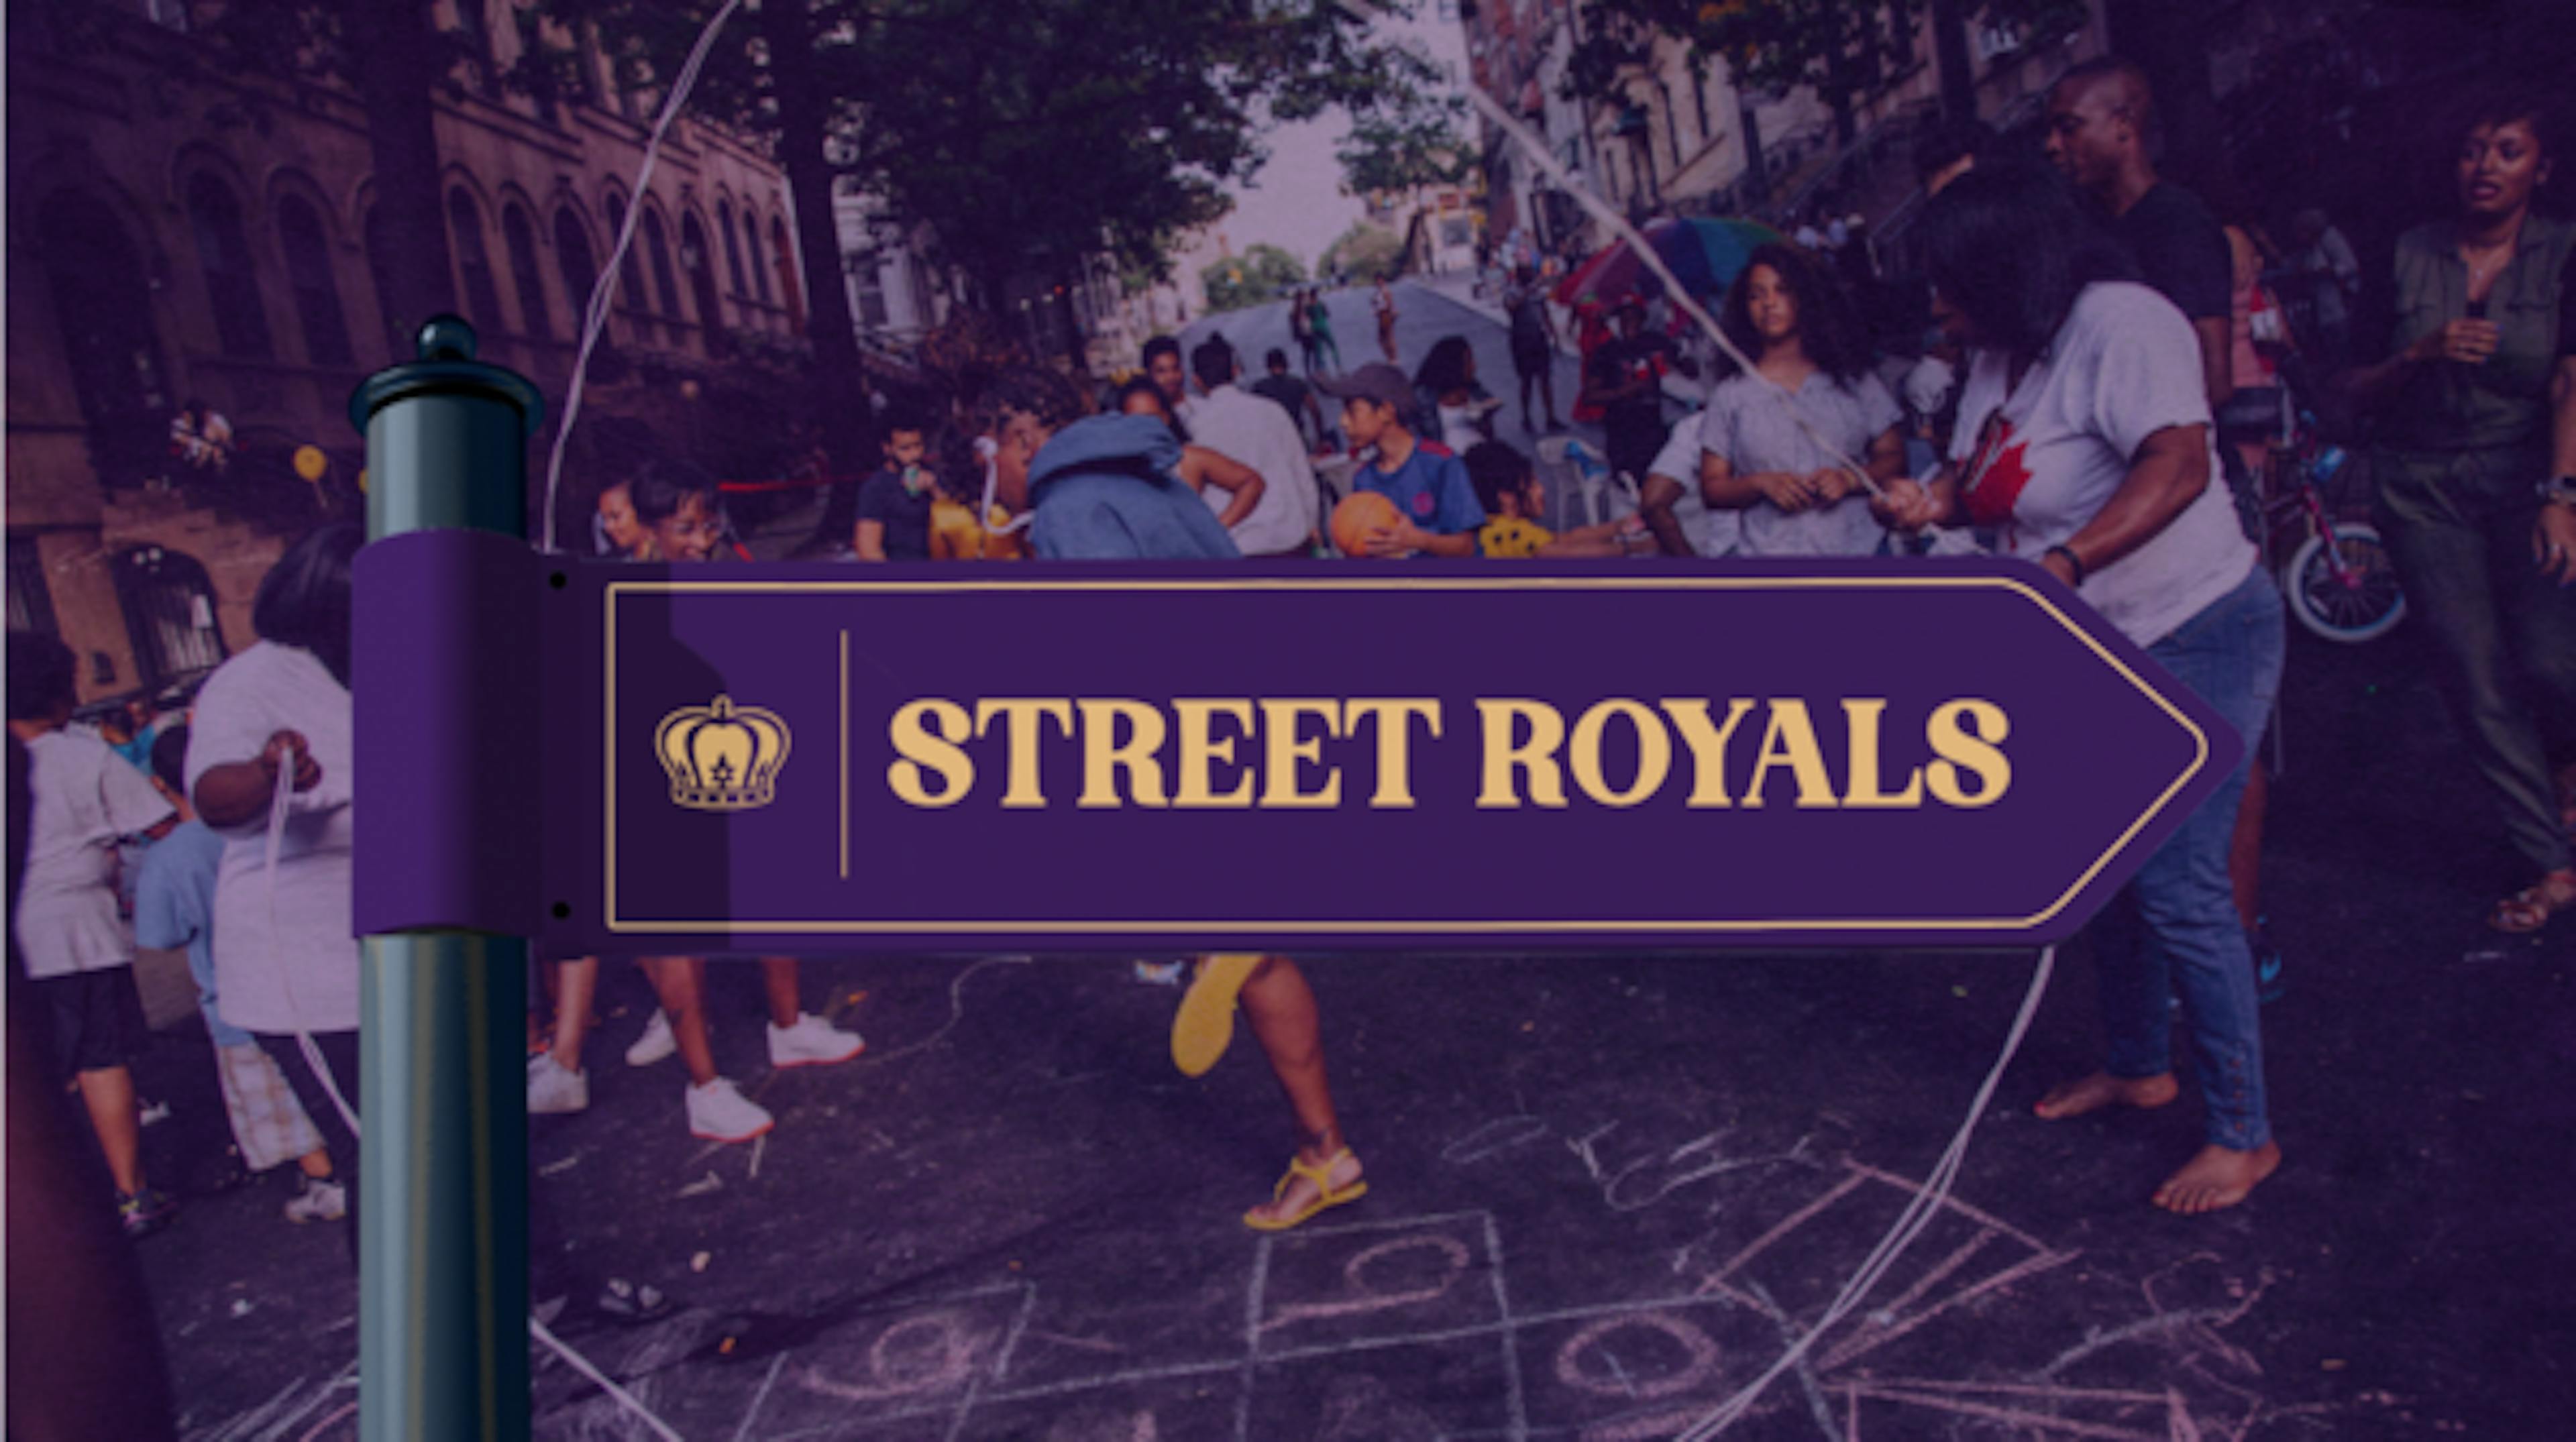 Street Royals street sign